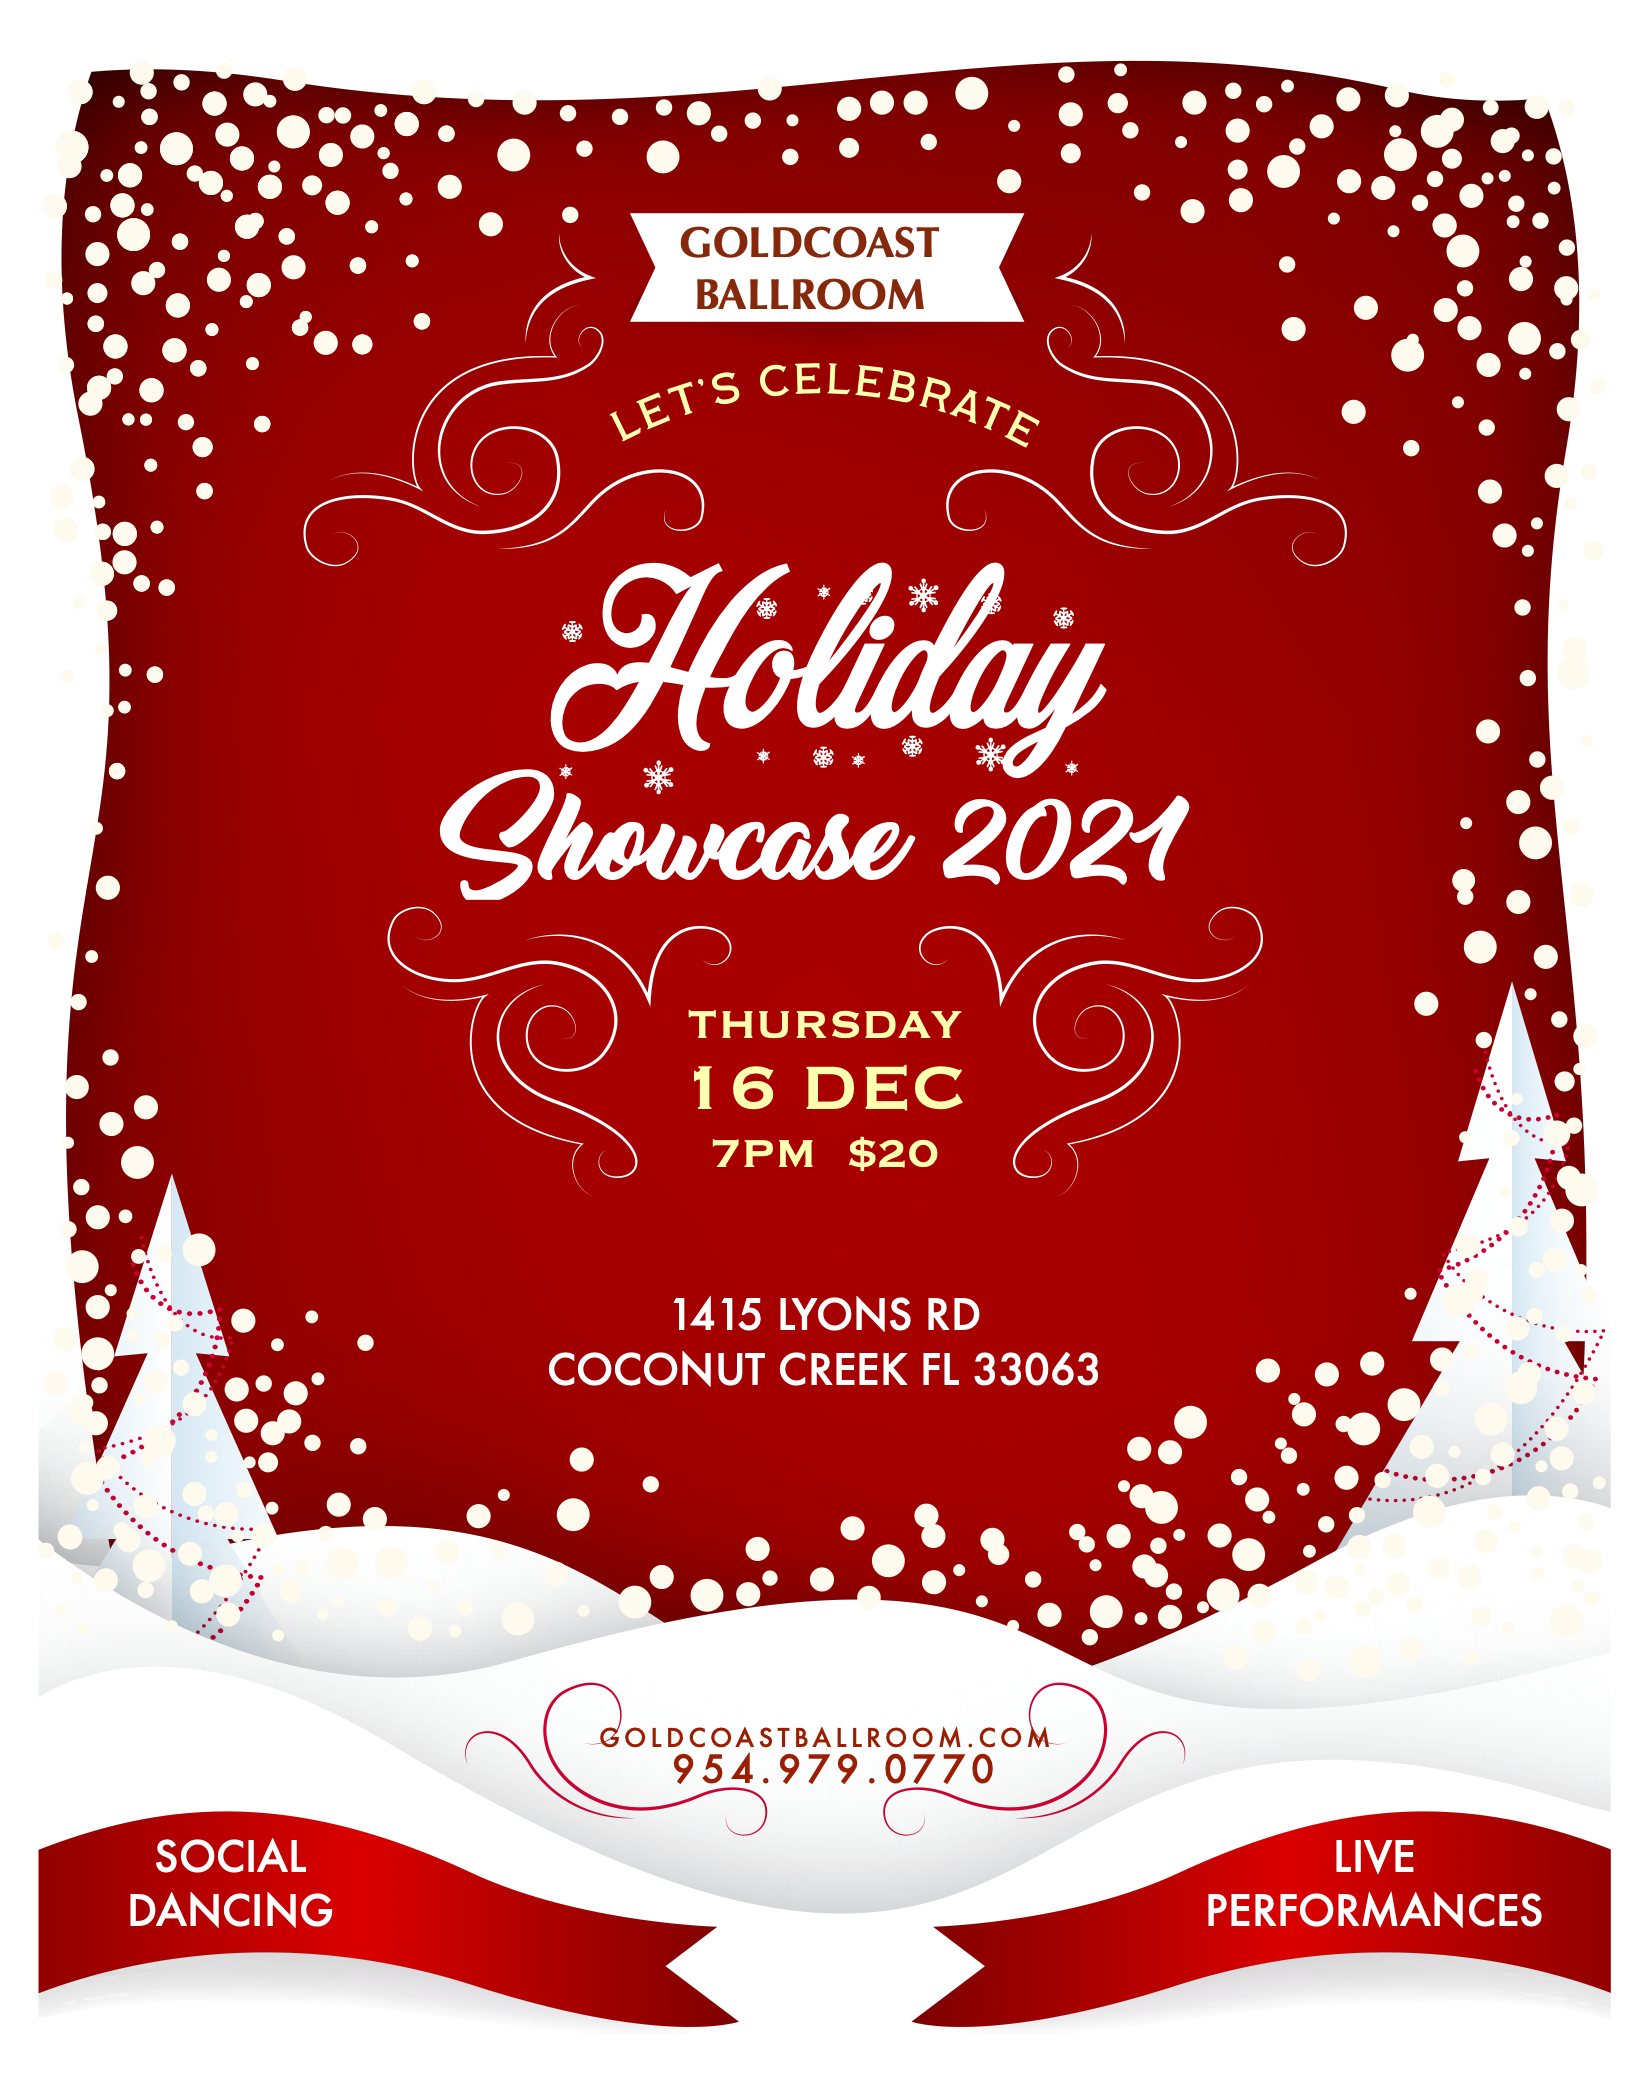 Goldcoast Ballroom Holiday Showcase - December 16, 2021!